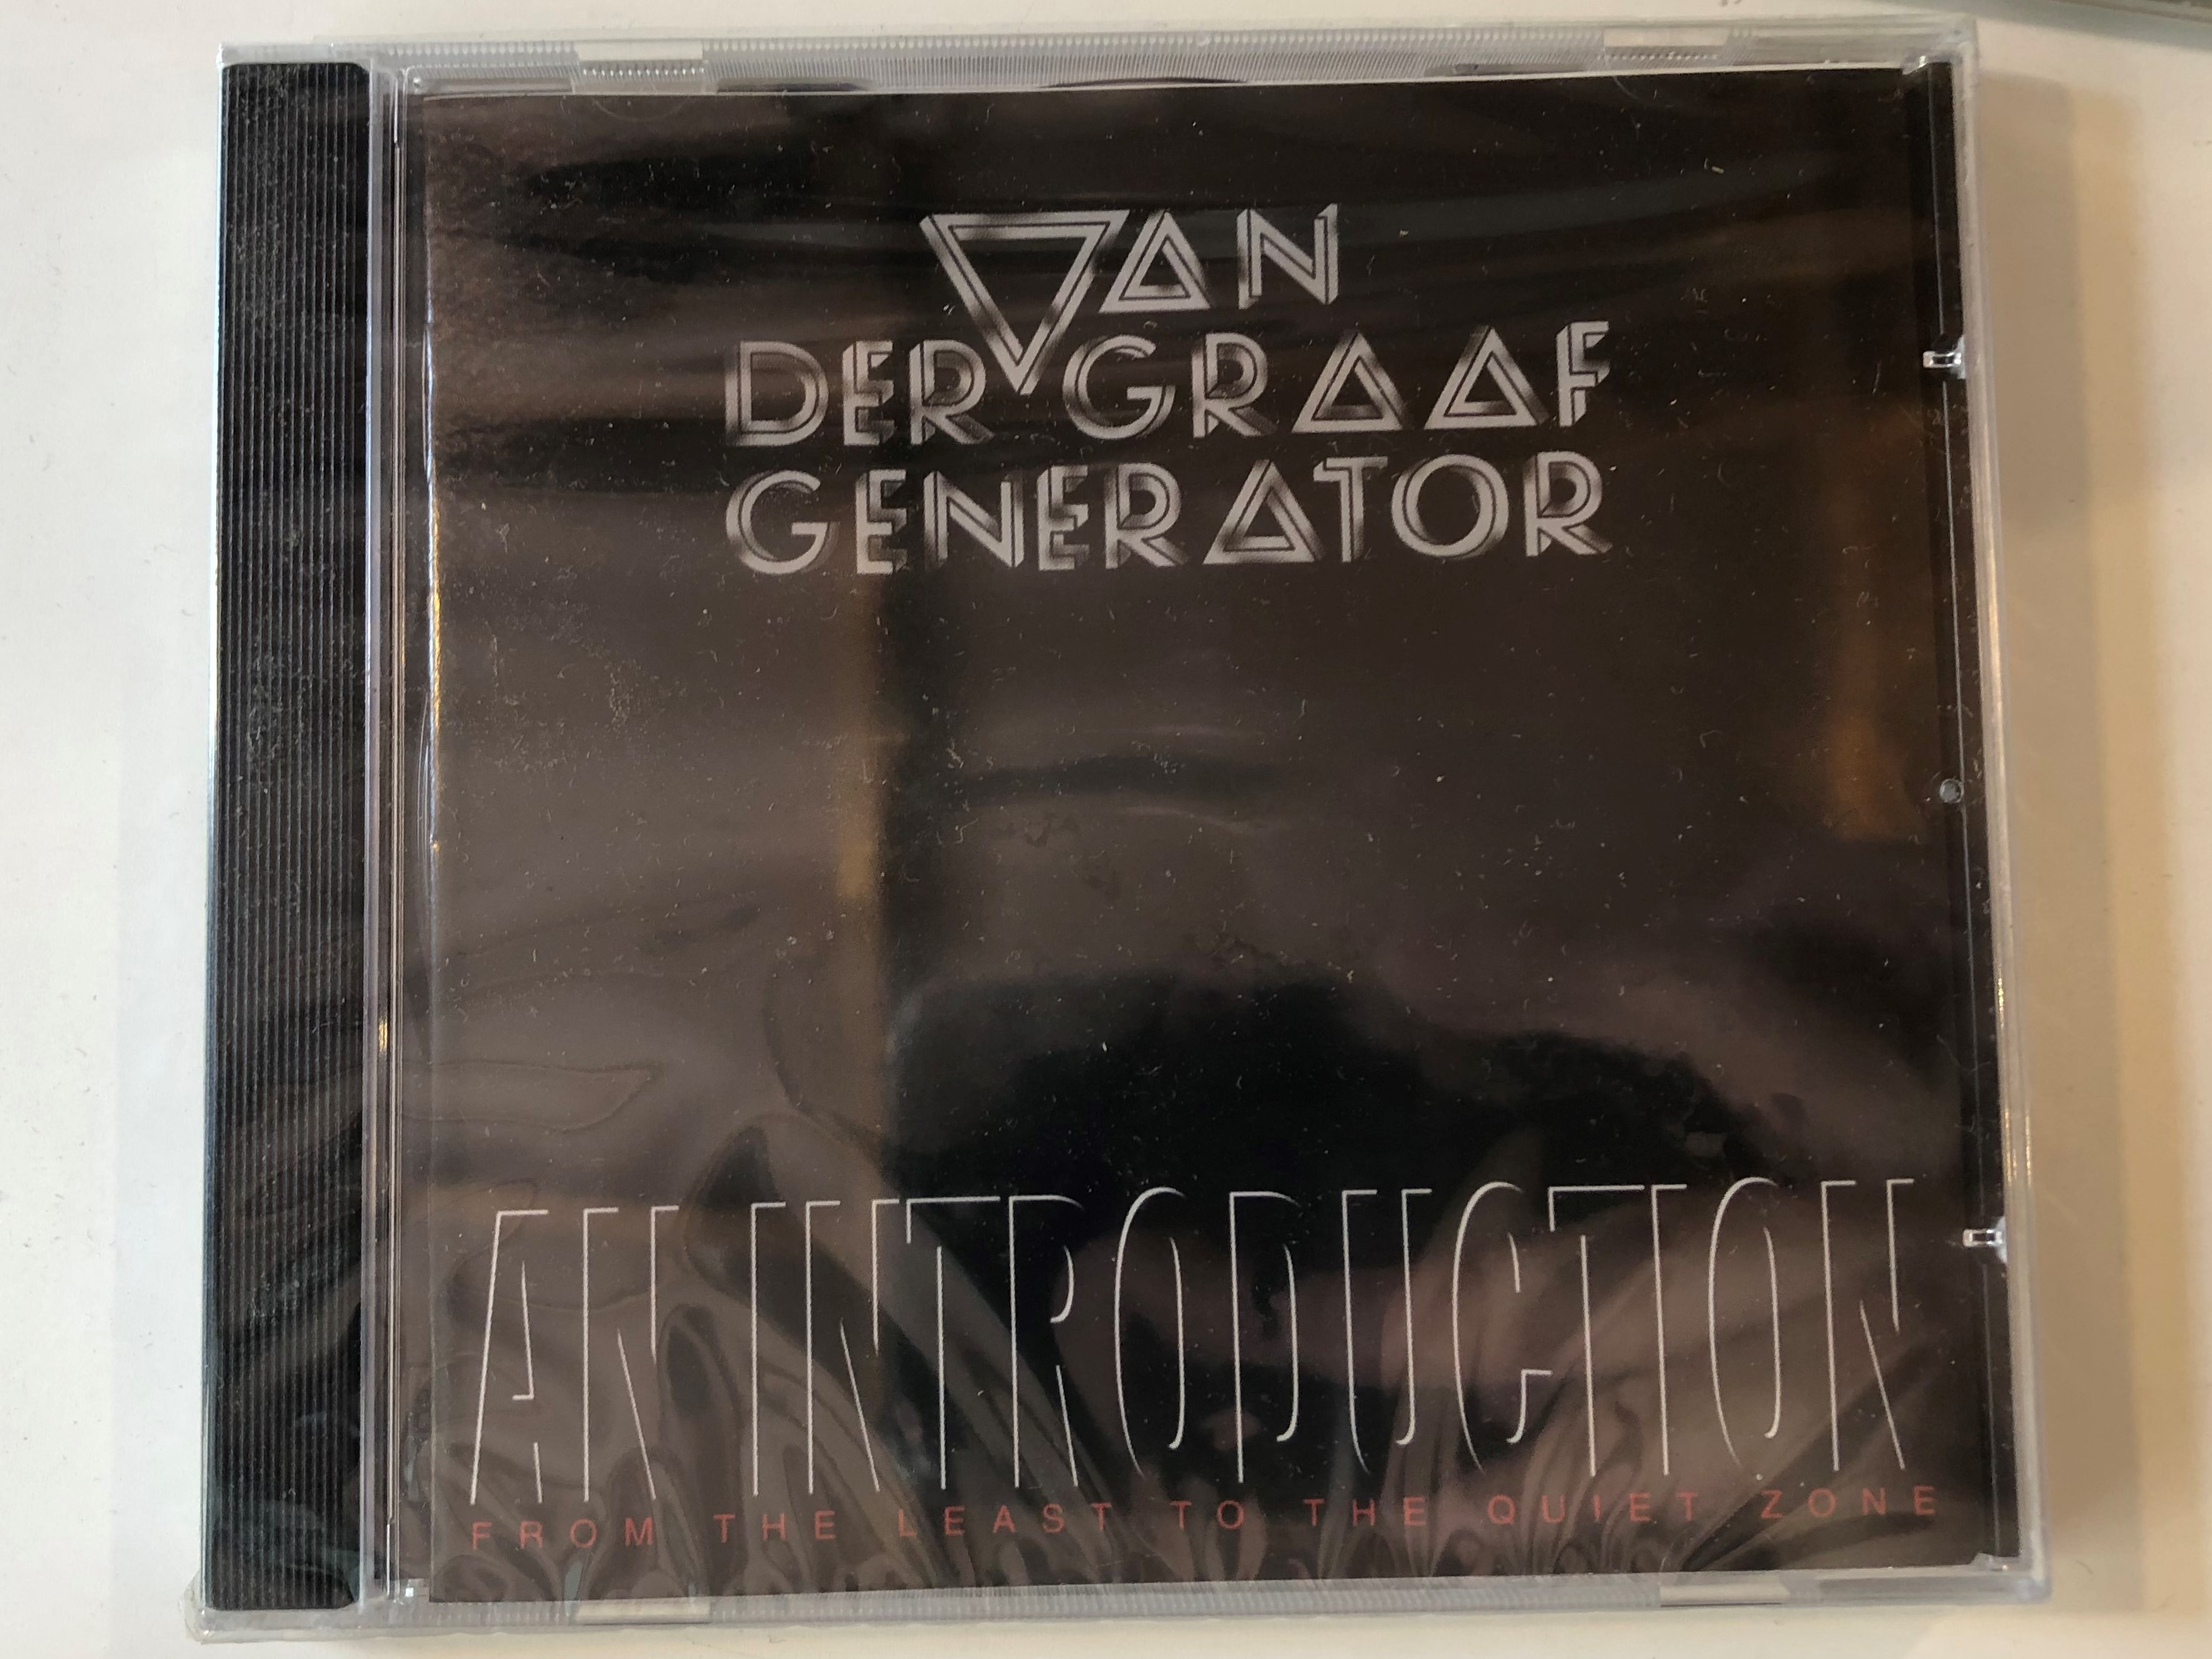 van-der-graaf-generator-an-introduction-from-the-least-to-the-quiet-zone-virgin-audio-cd-2000-cdv2932-1-.jpg